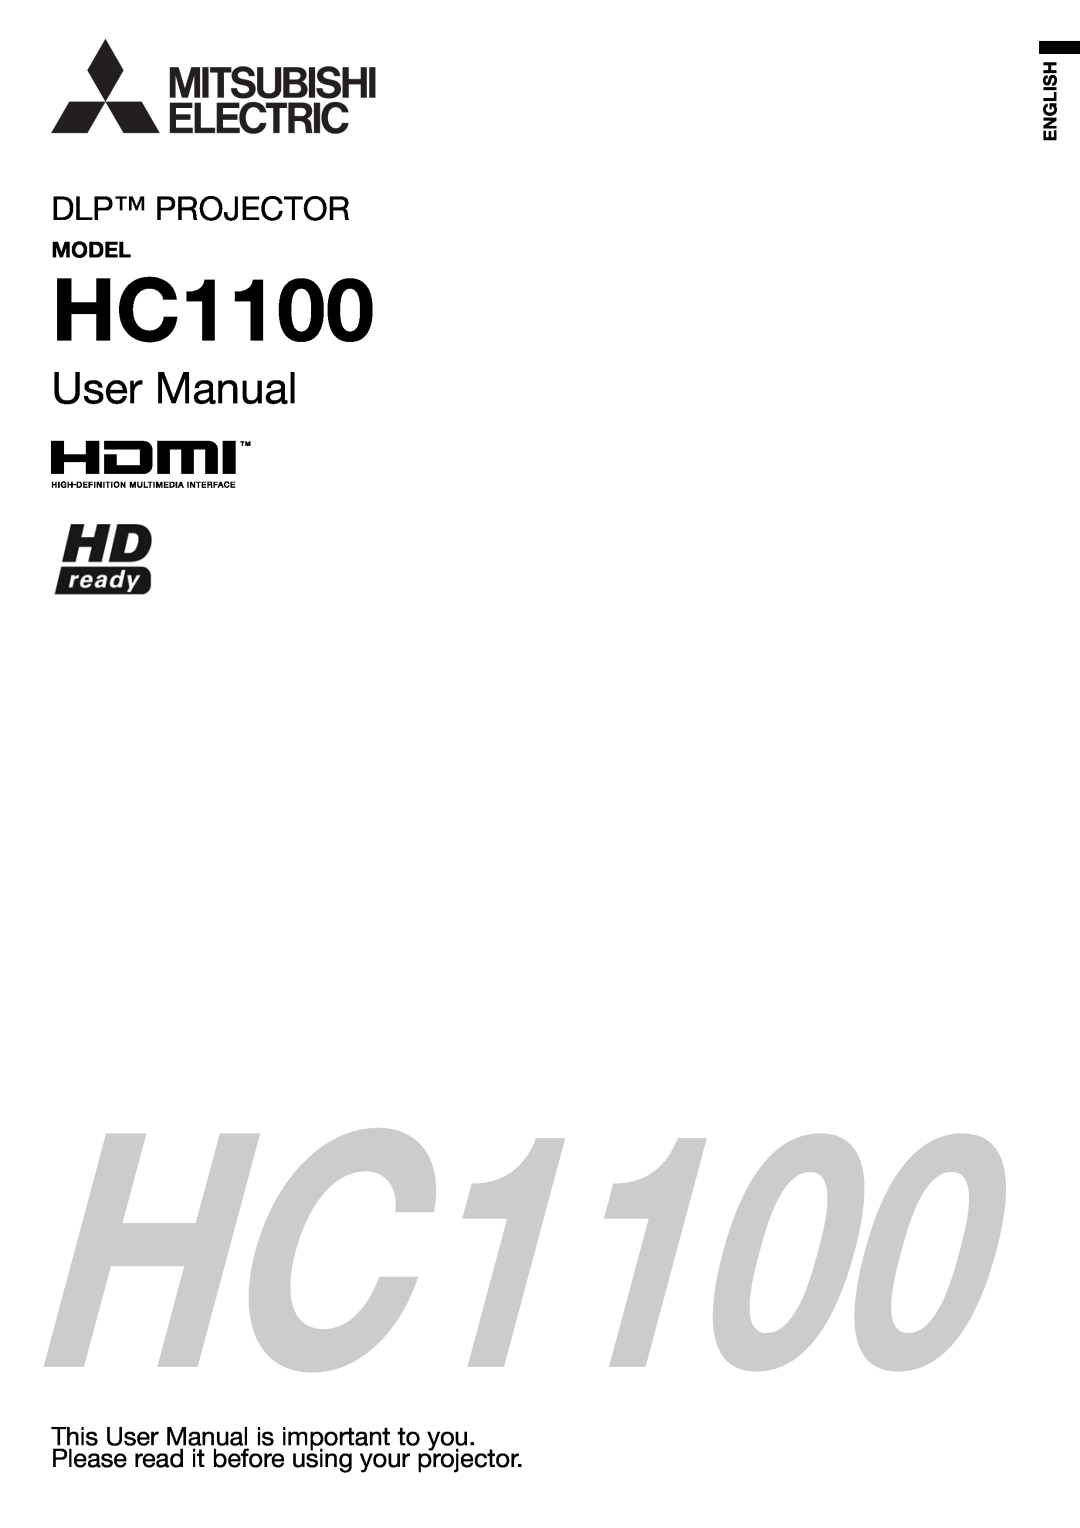 Mitsubishi HC1100 user manual Model, User Manual, Dlp Projector, English 